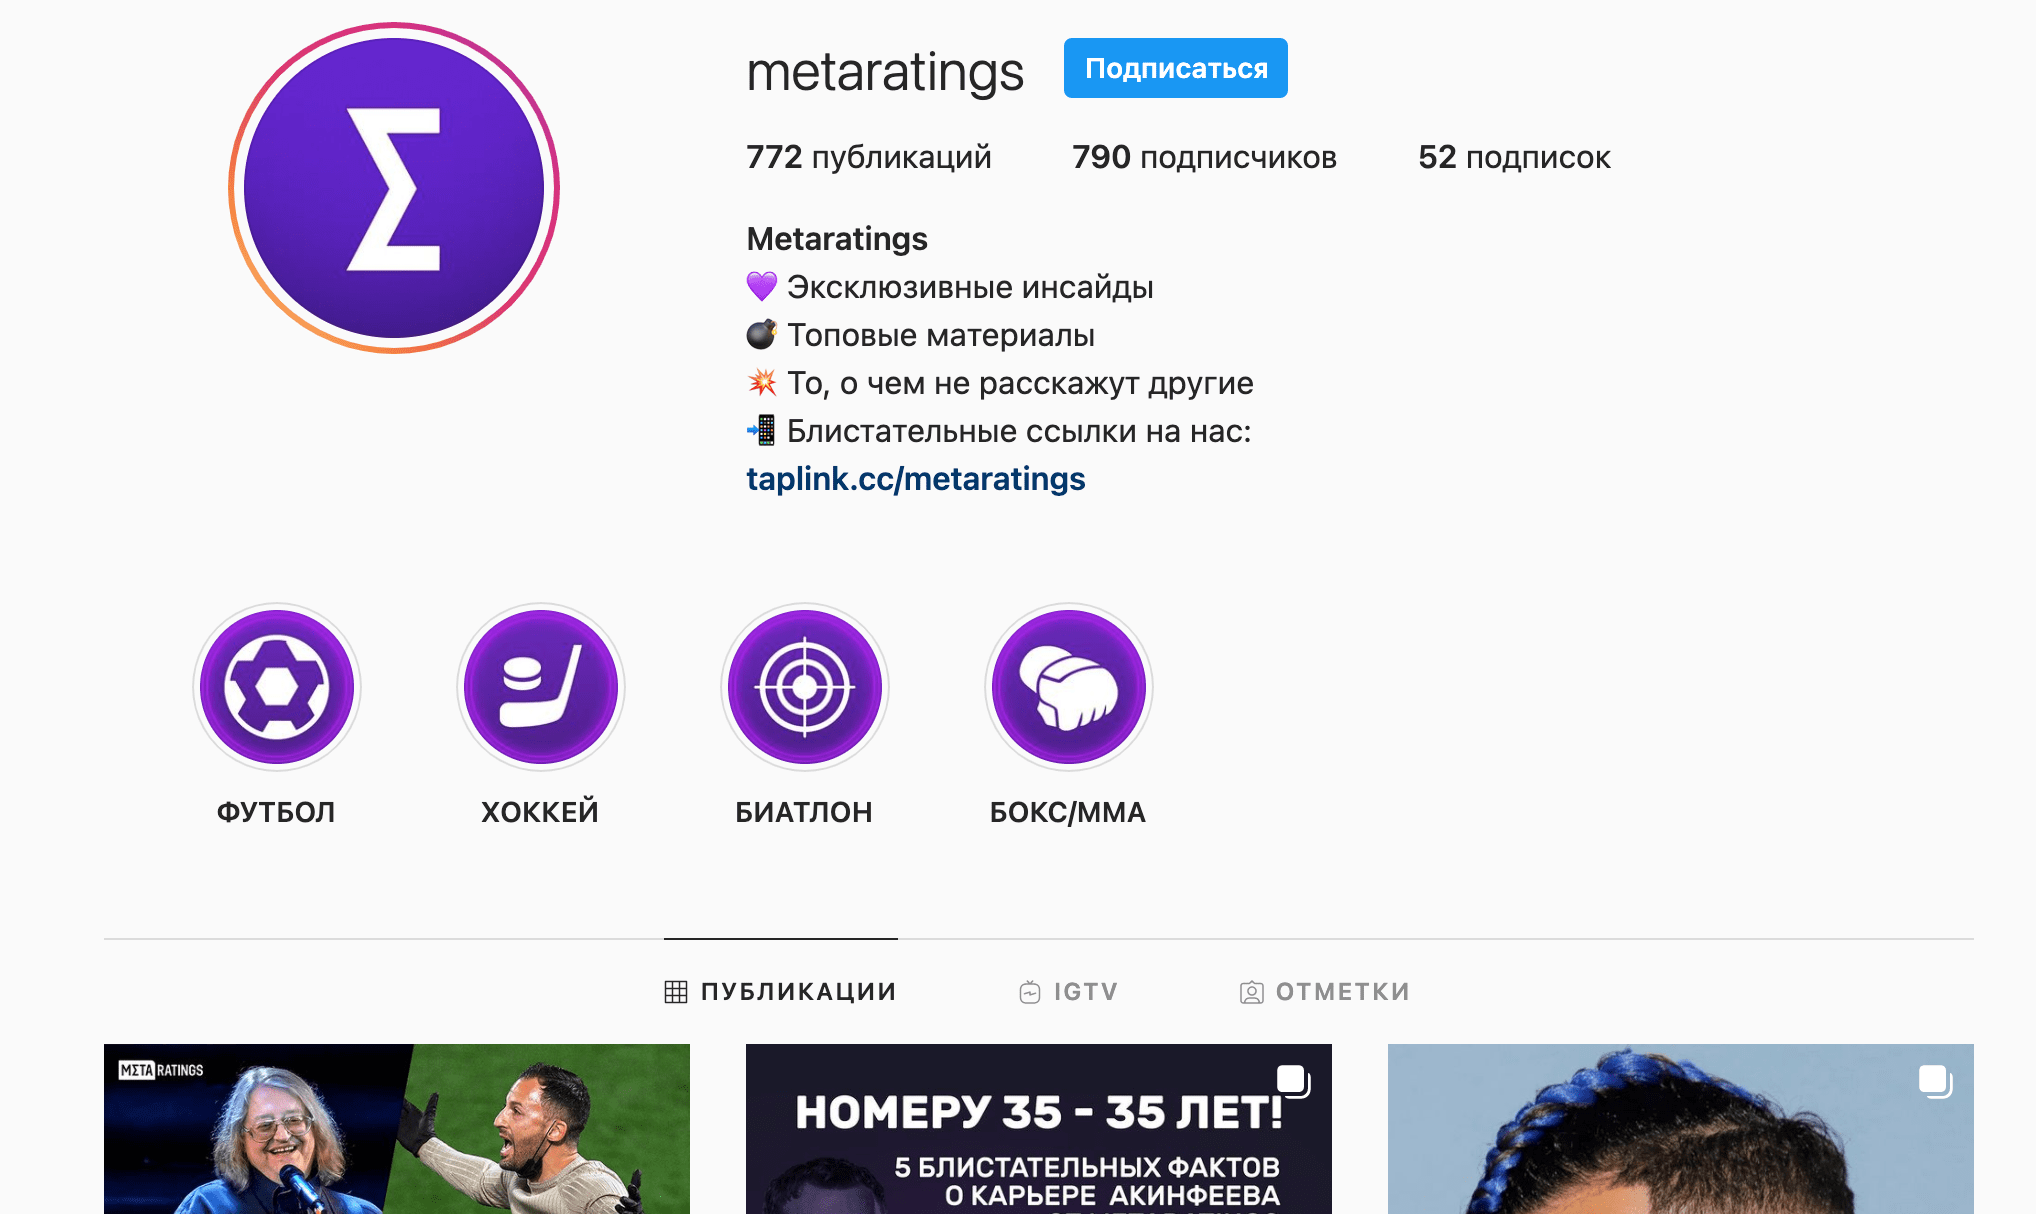 Инстграм Metaratings.ru (Метаратингс ру)